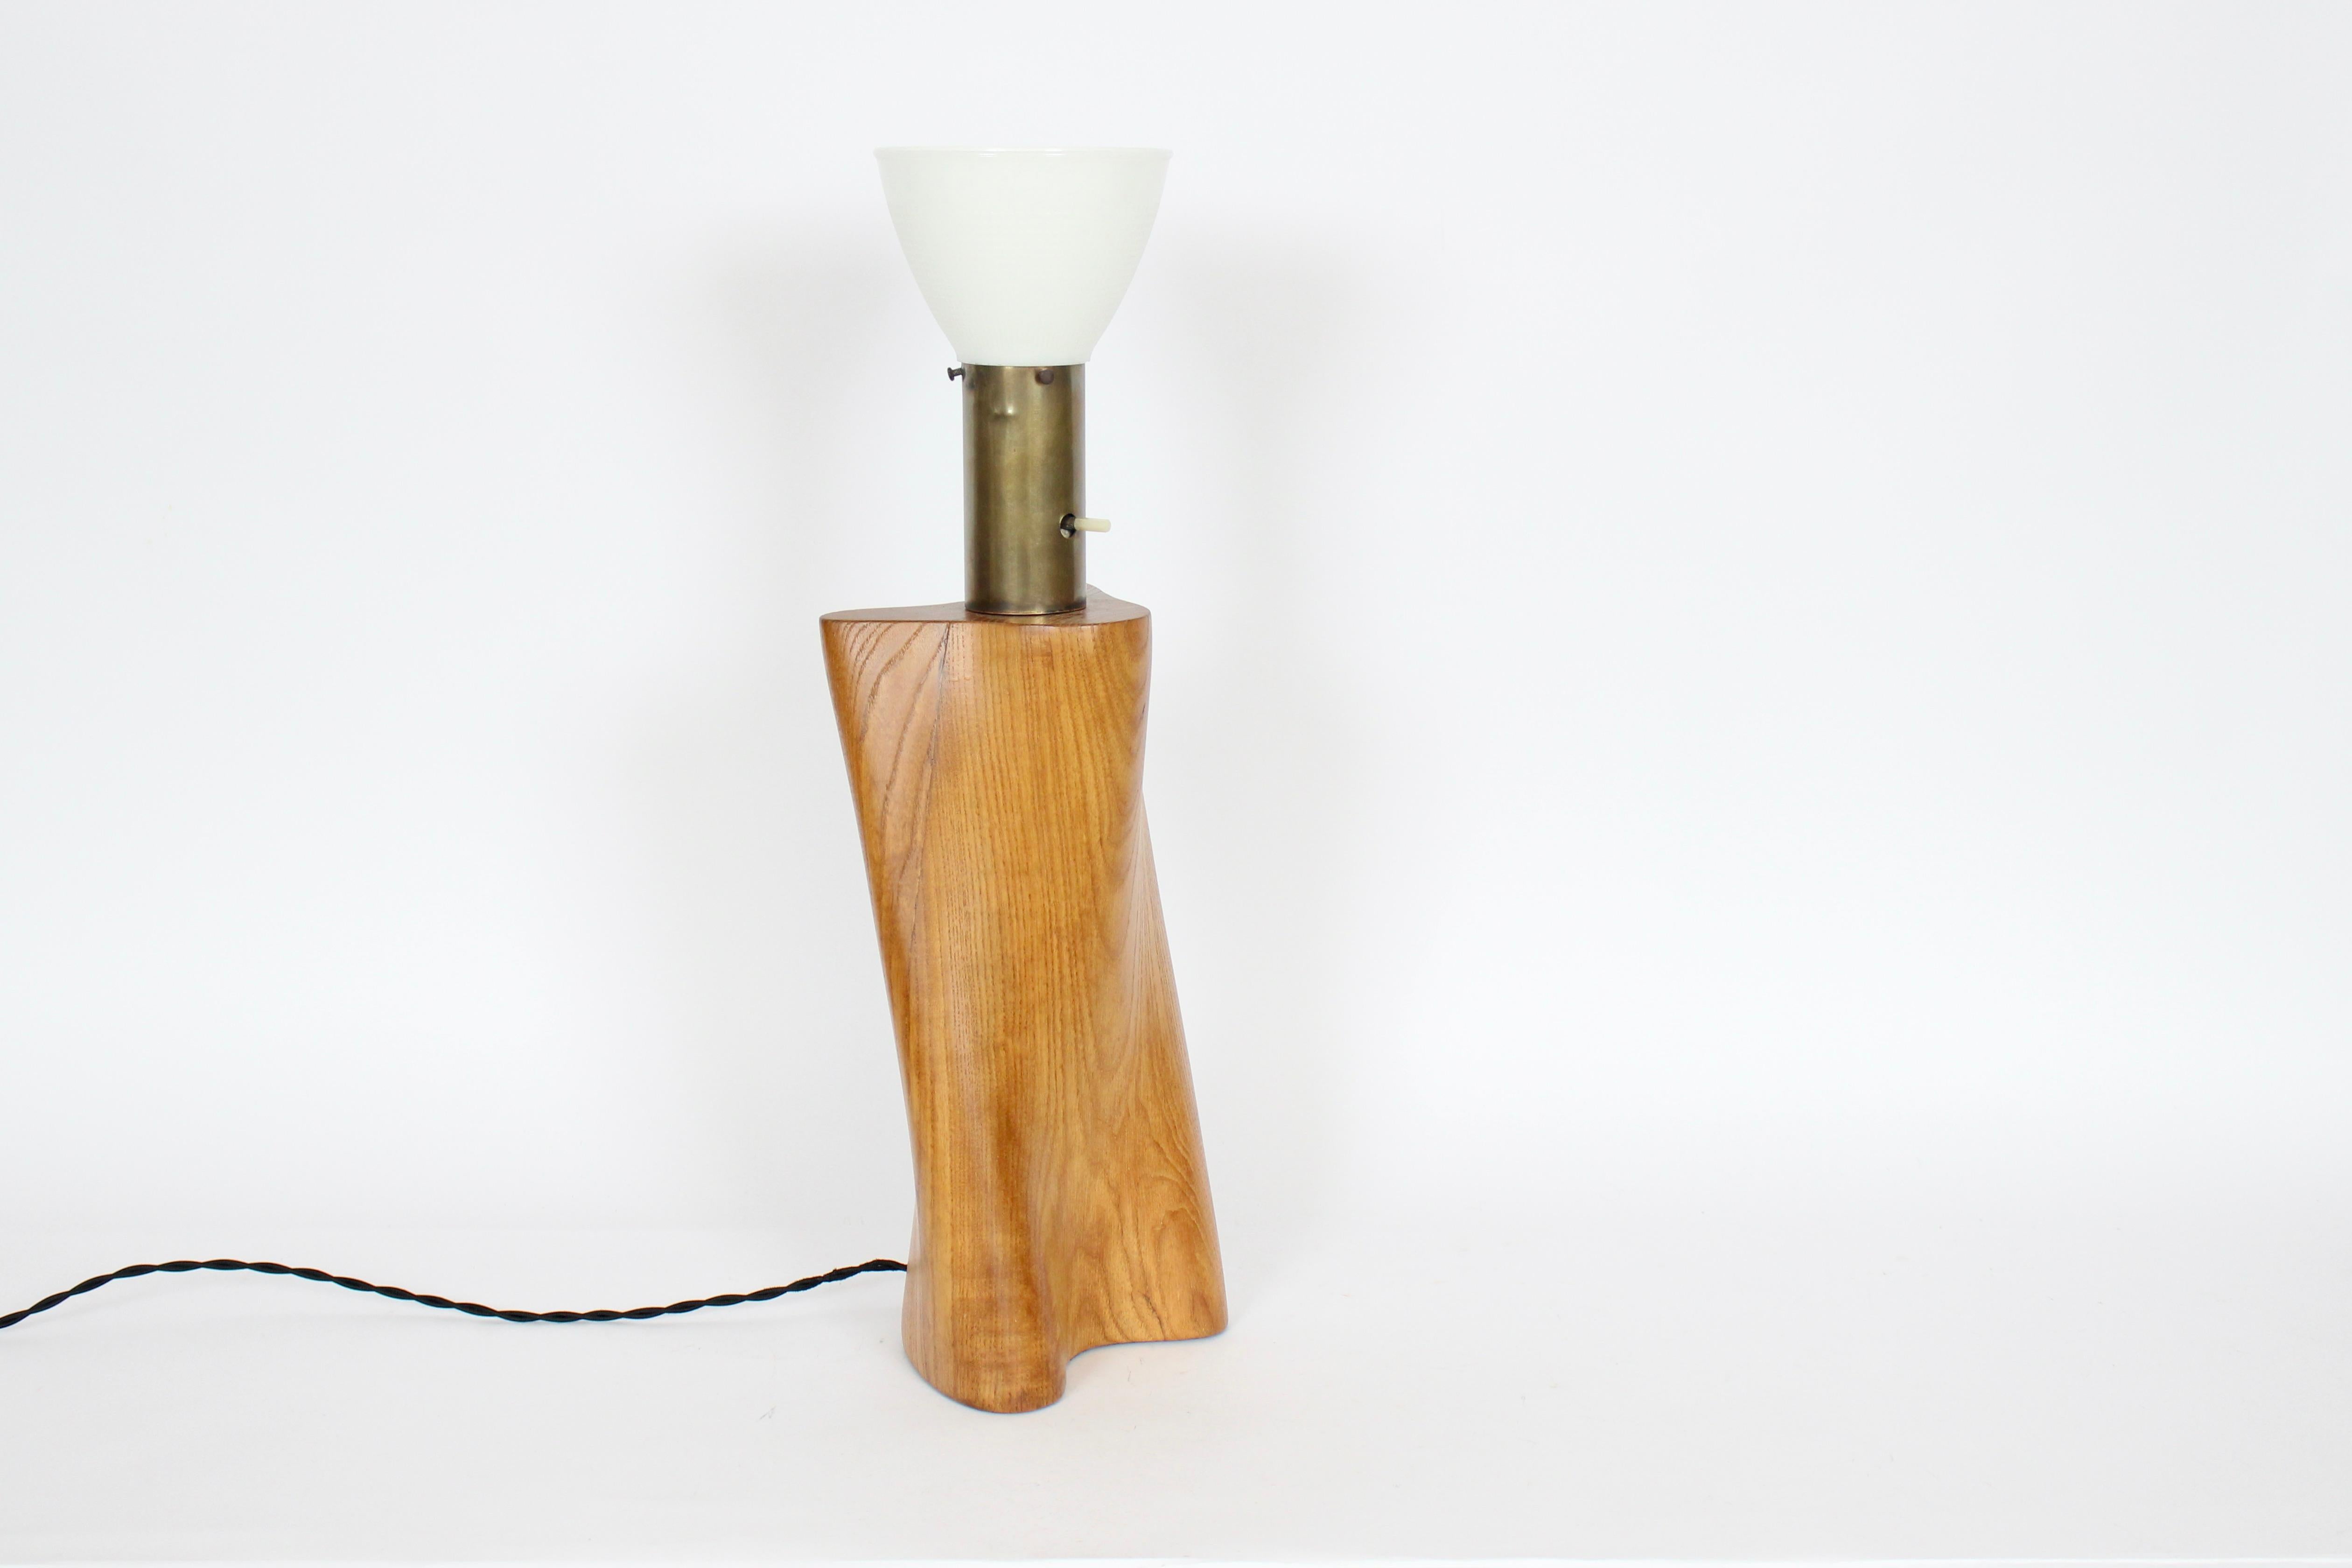 Mid-Century Modern Yasha Heifetz Biomorphic Ash Table Lamp with Milk Glass Shade, 1940s For Sale